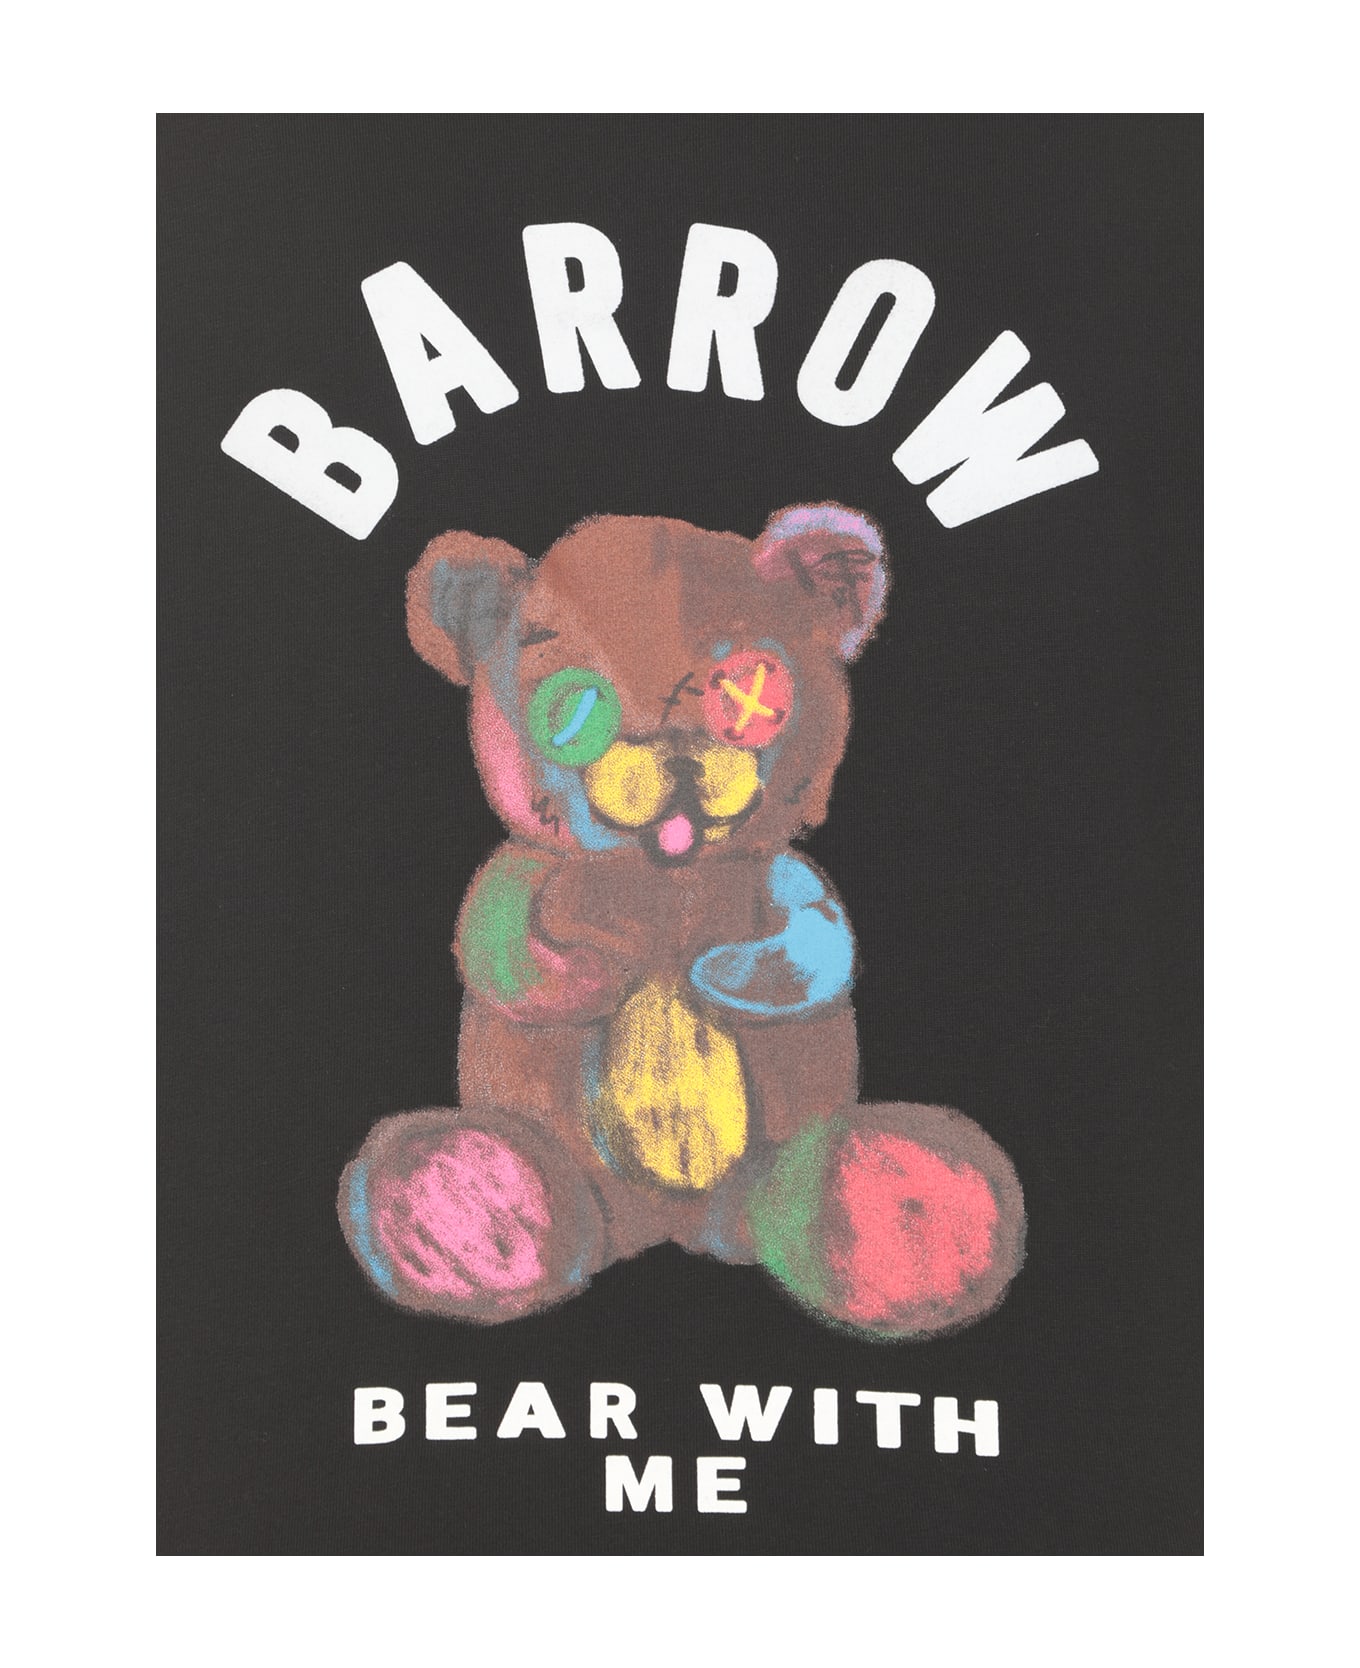 Barrow T-shirt With Logo - Black